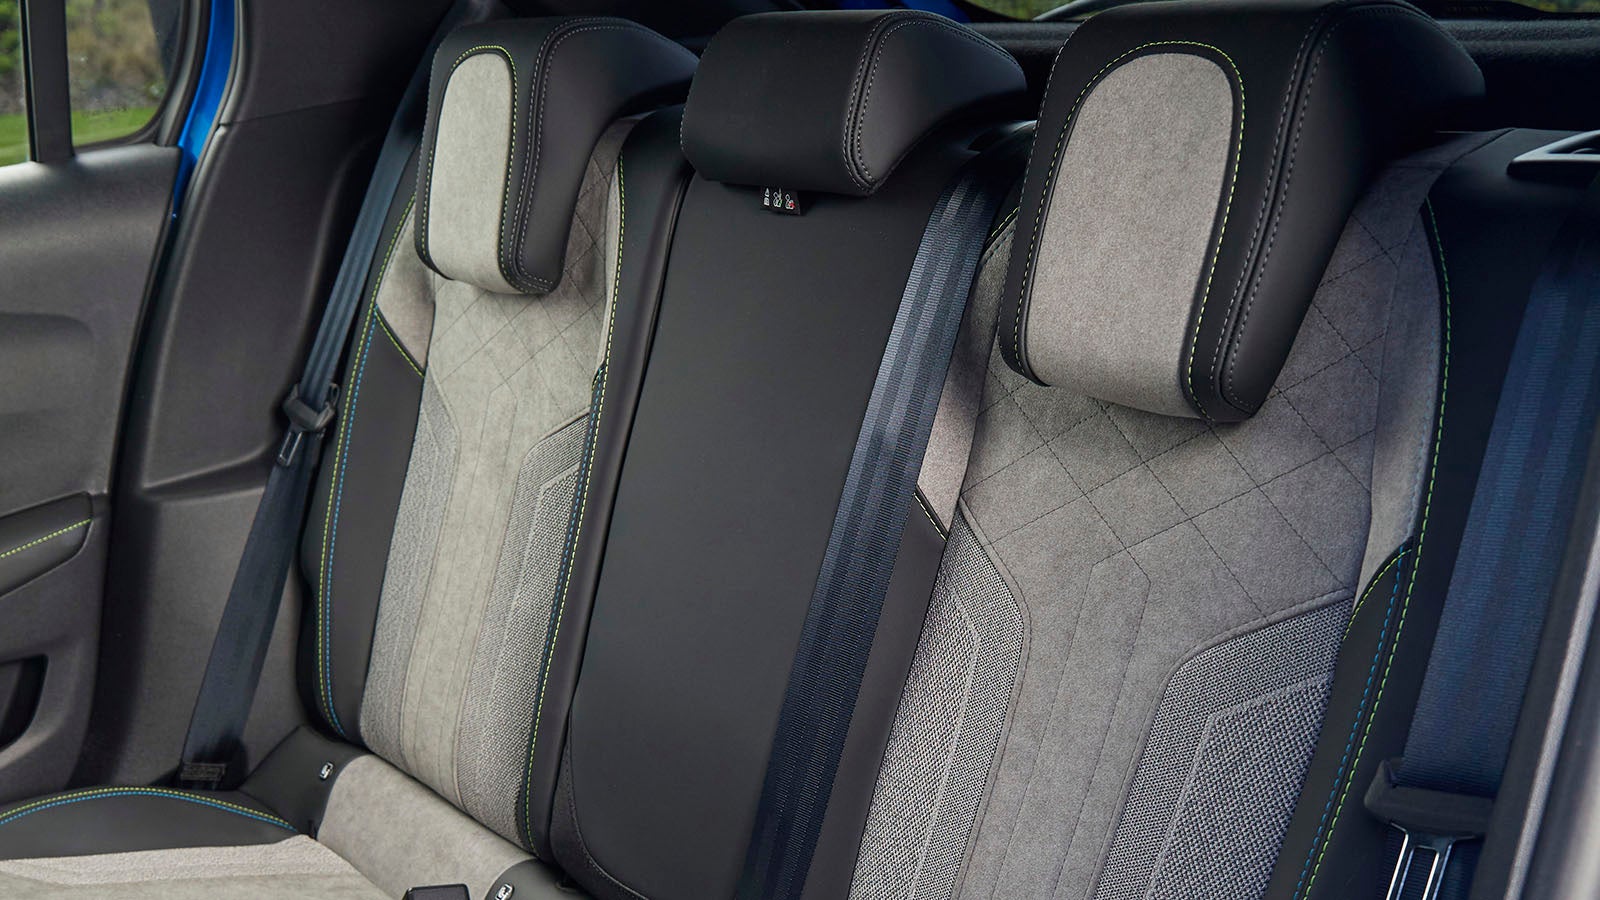 Peugeot 208 review rear seats